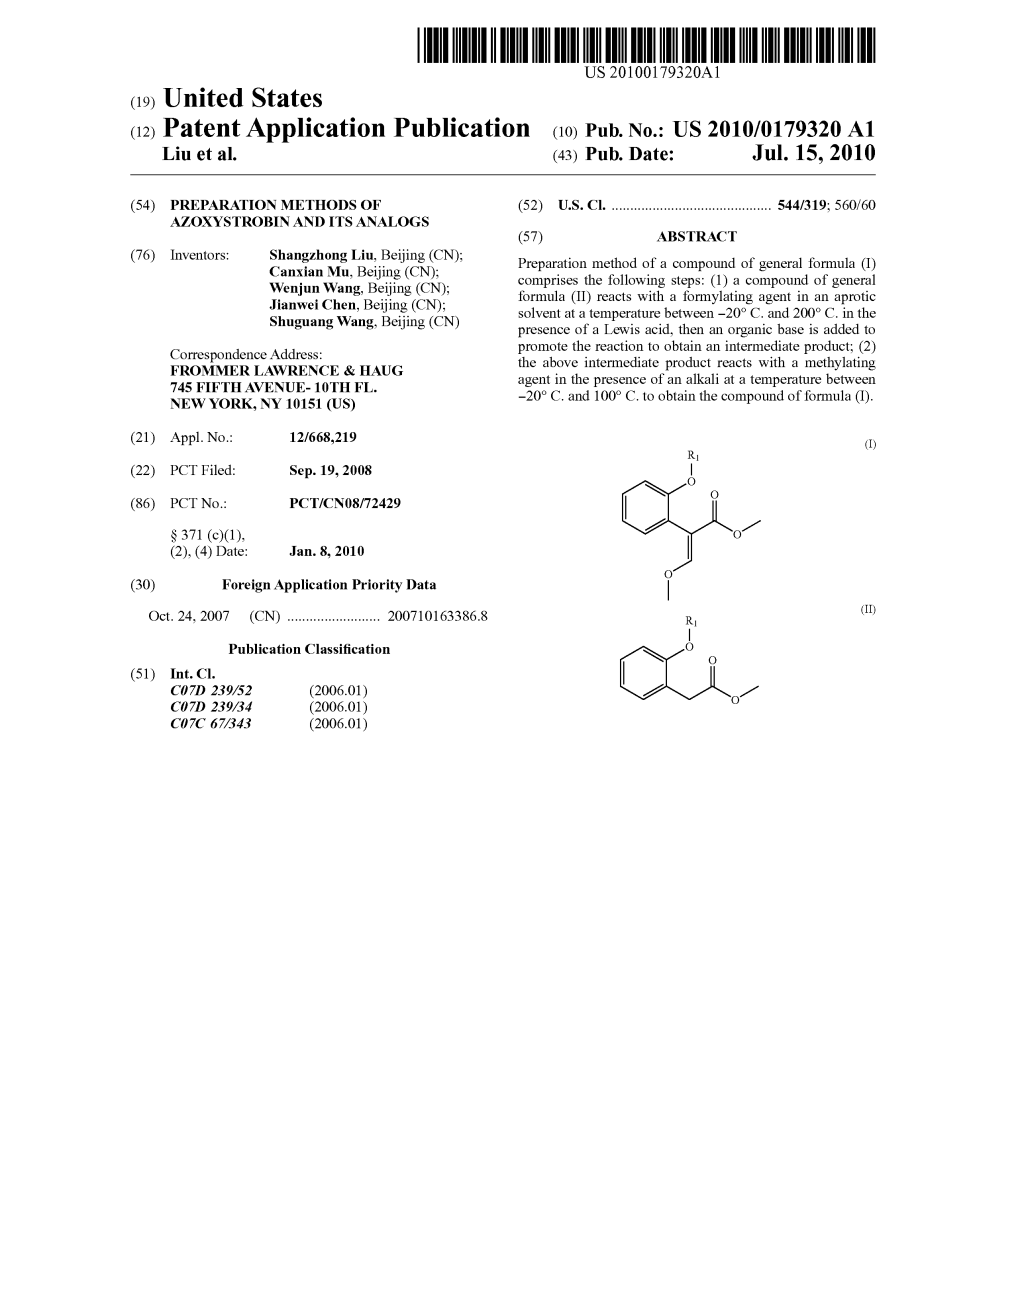 (12) Patent Application Publication (10) Pub. No.: US 2010/0179320 A1 Liu Et Al